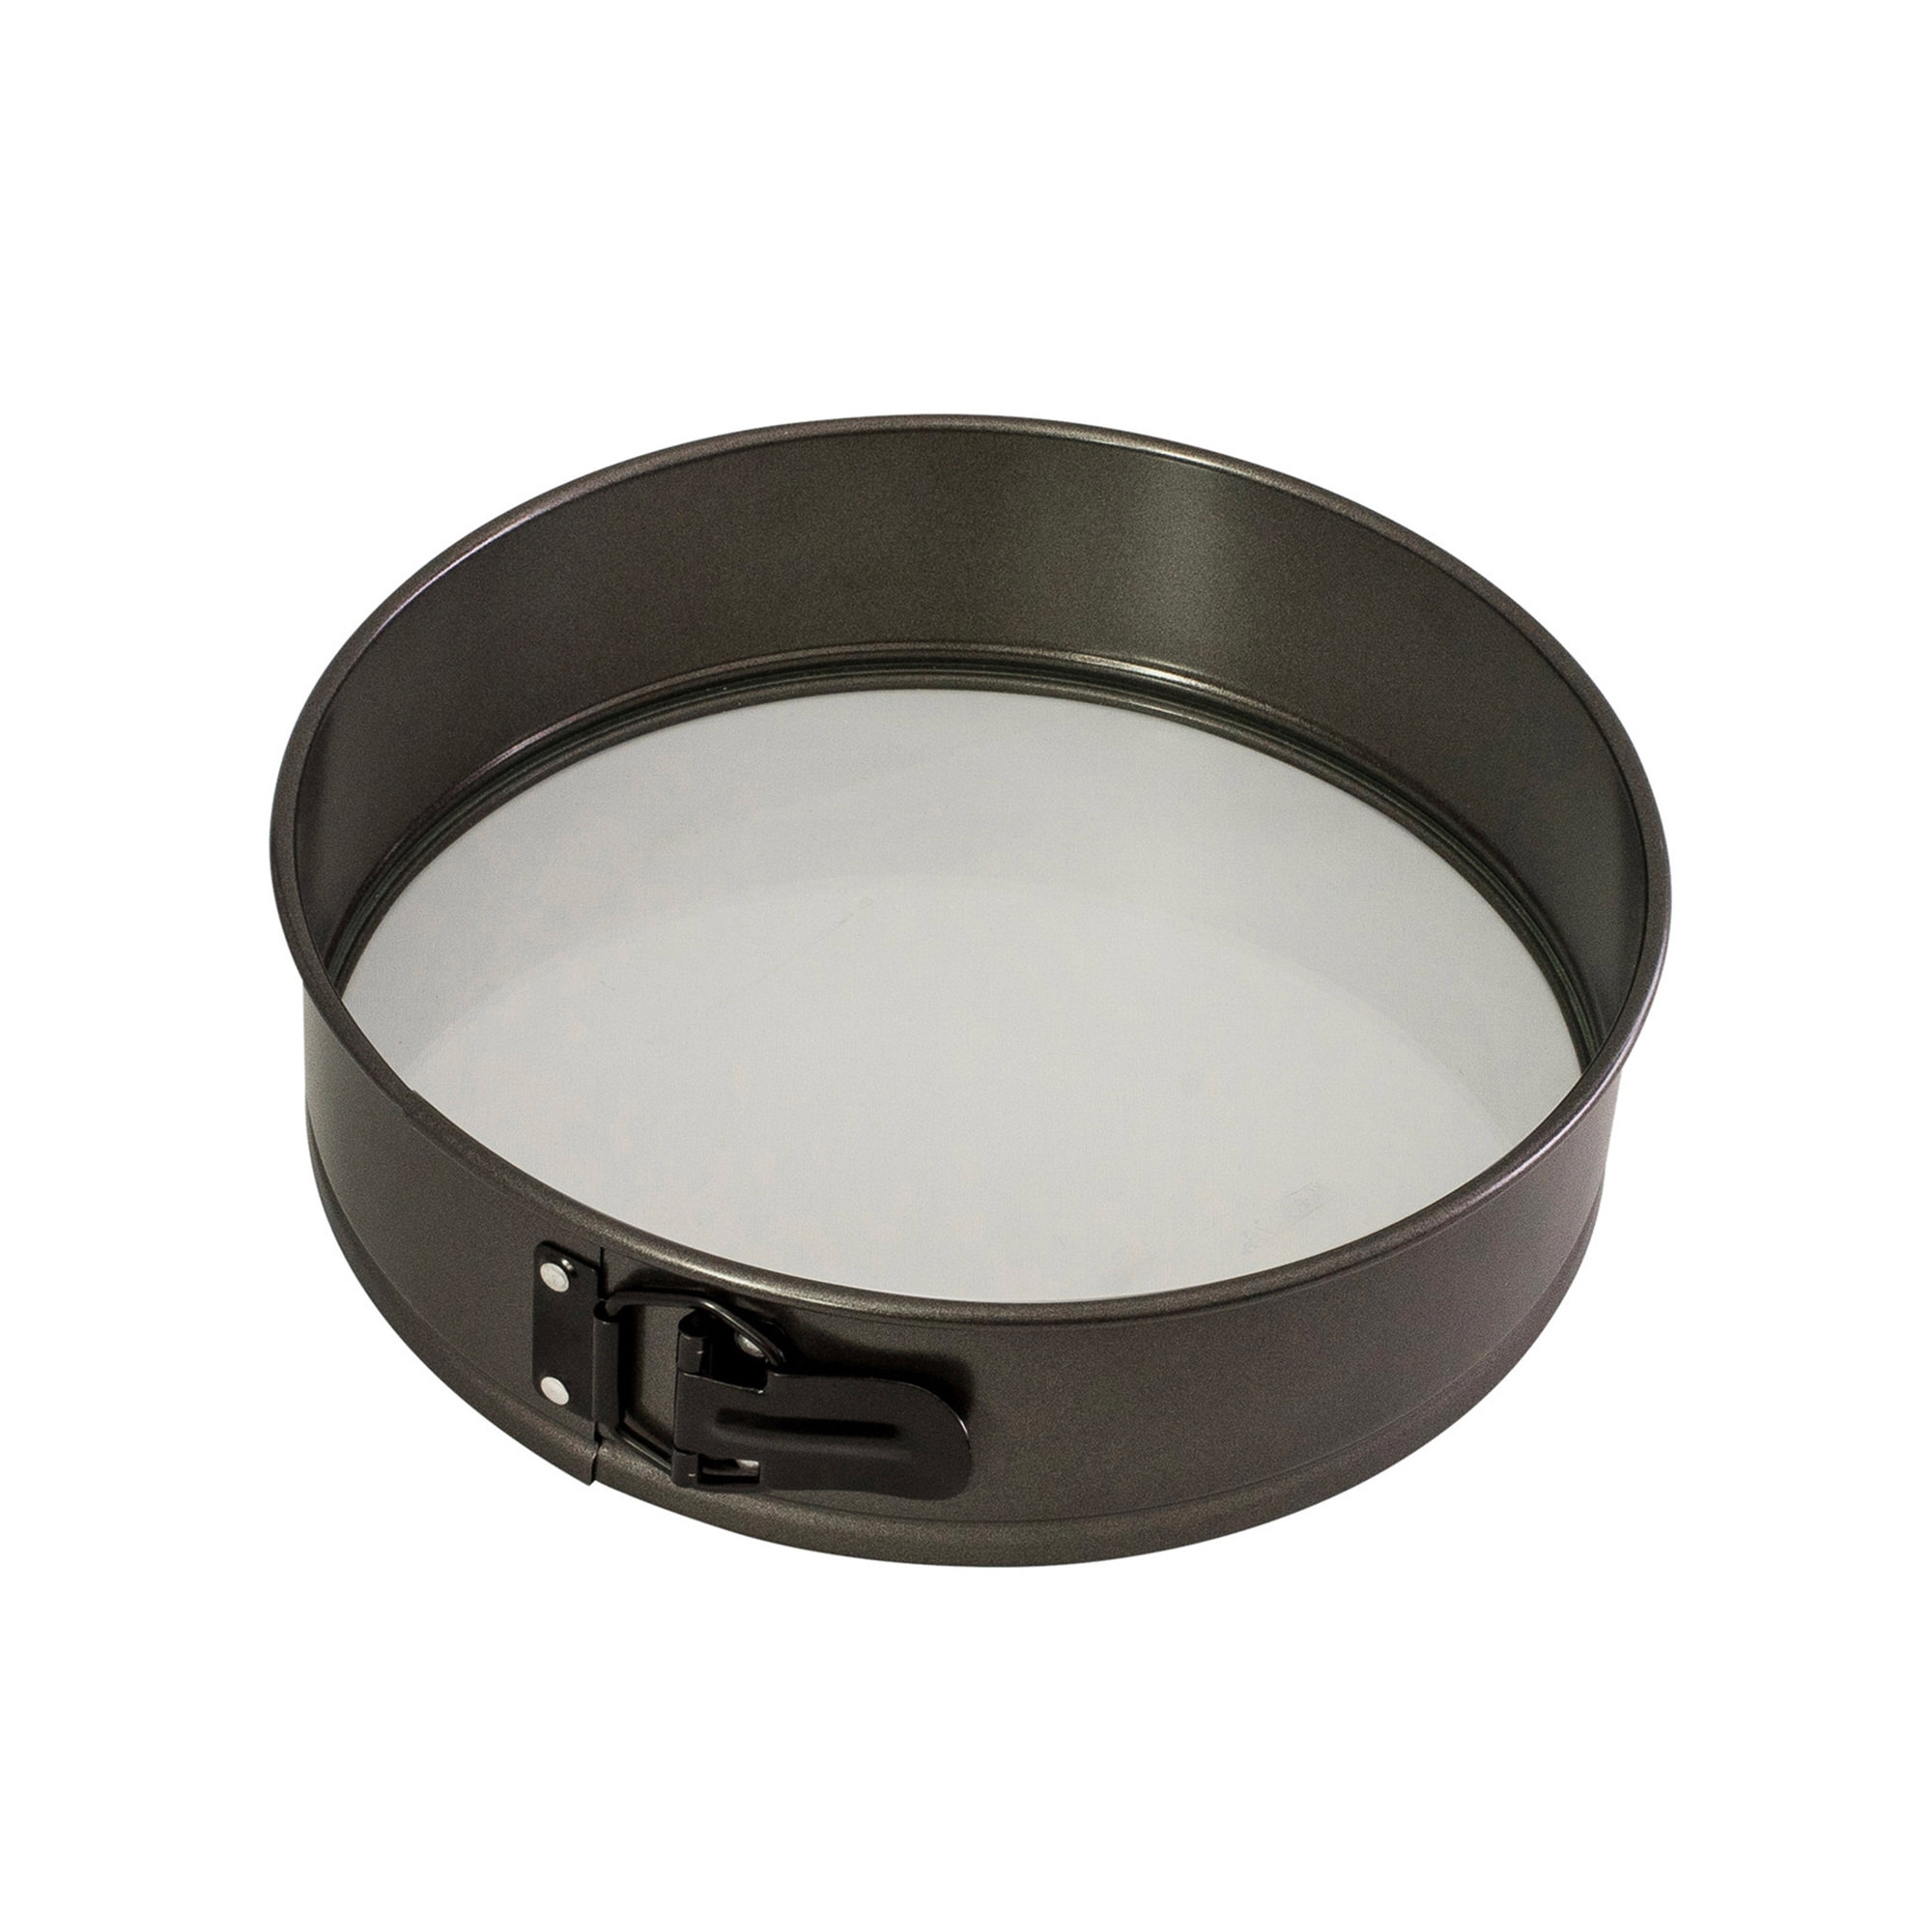 Bakemaster Non Stick Springform Round Cake Pan with Glass Base 26cm Image 1